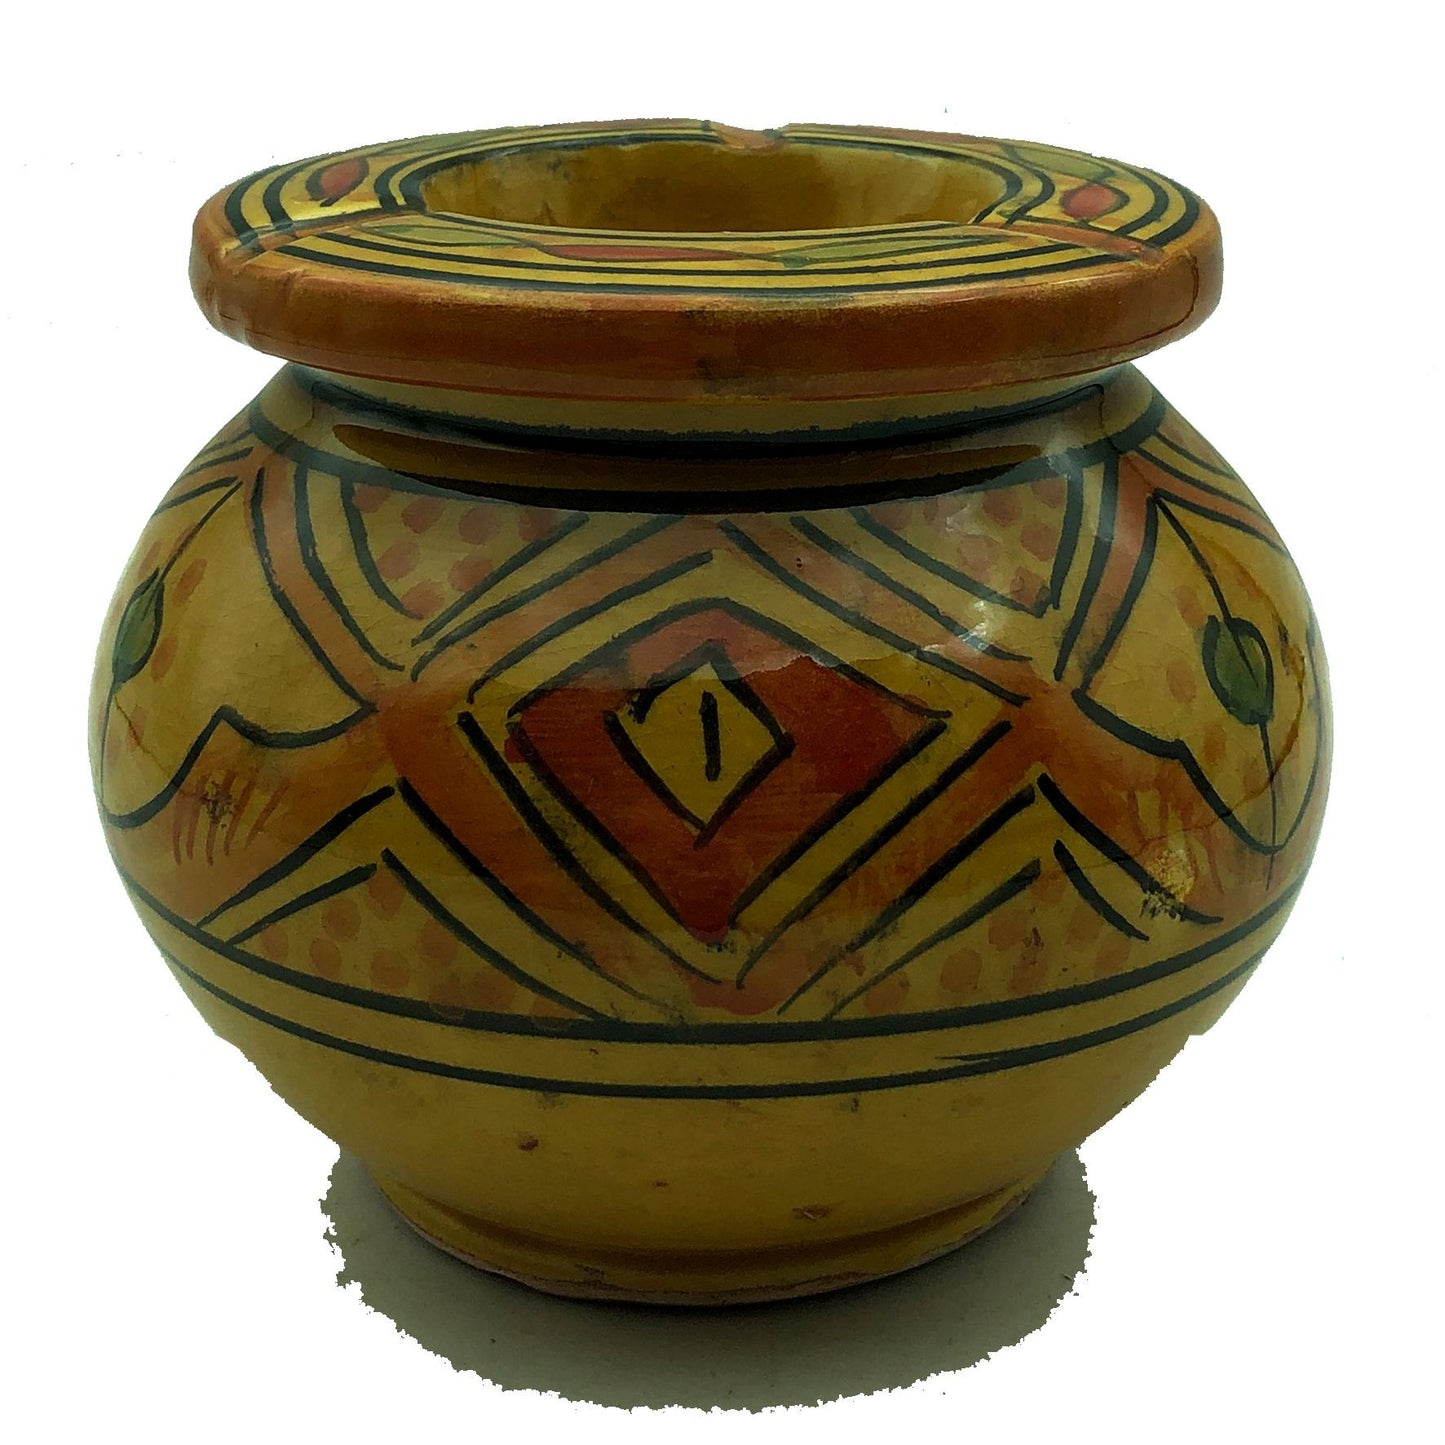 Etnico Arredo Posacenere Ceramica Antiodore Terracotta Marocchina 1604211016